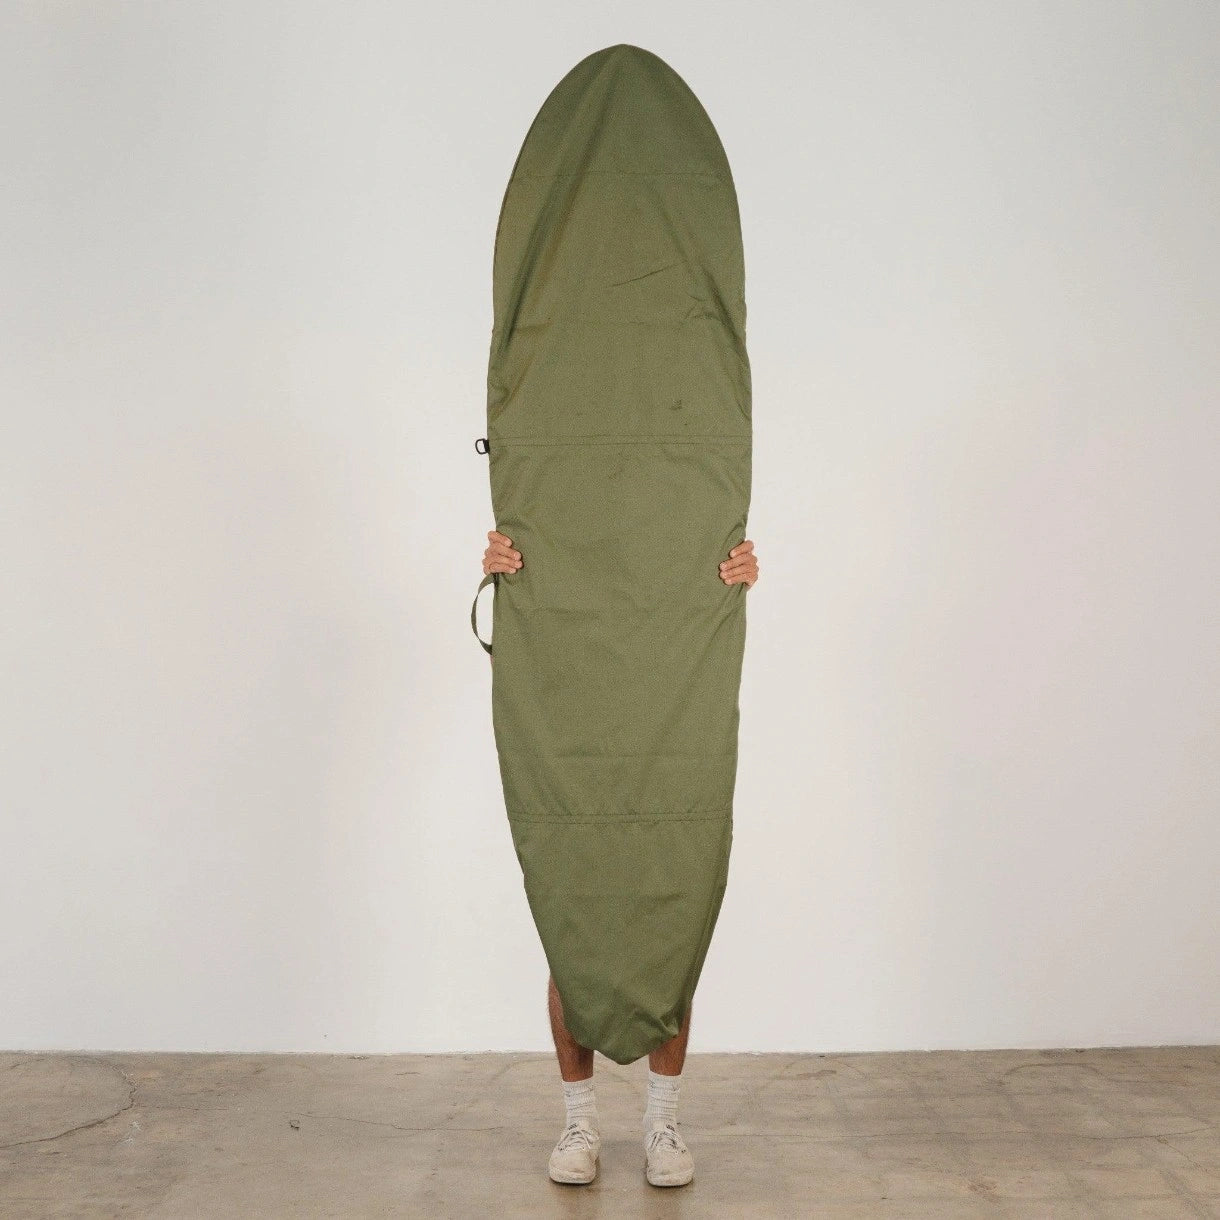 8ft canvas surfboard bag